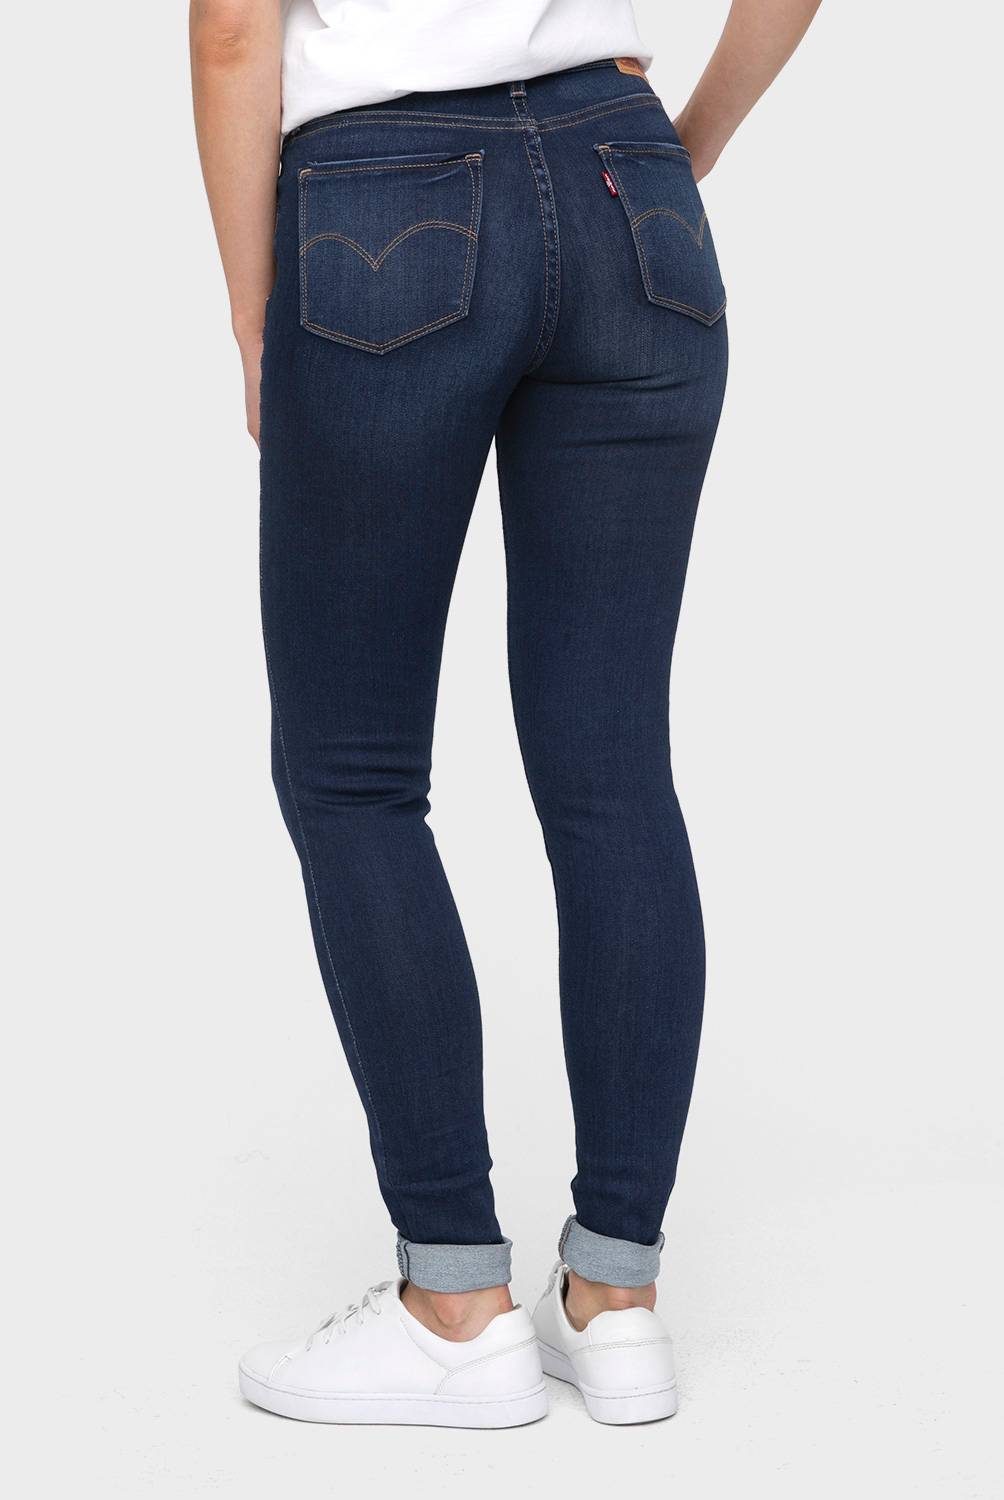 LEVIS - Jeans Super Skinny Tiro Alto Mujer